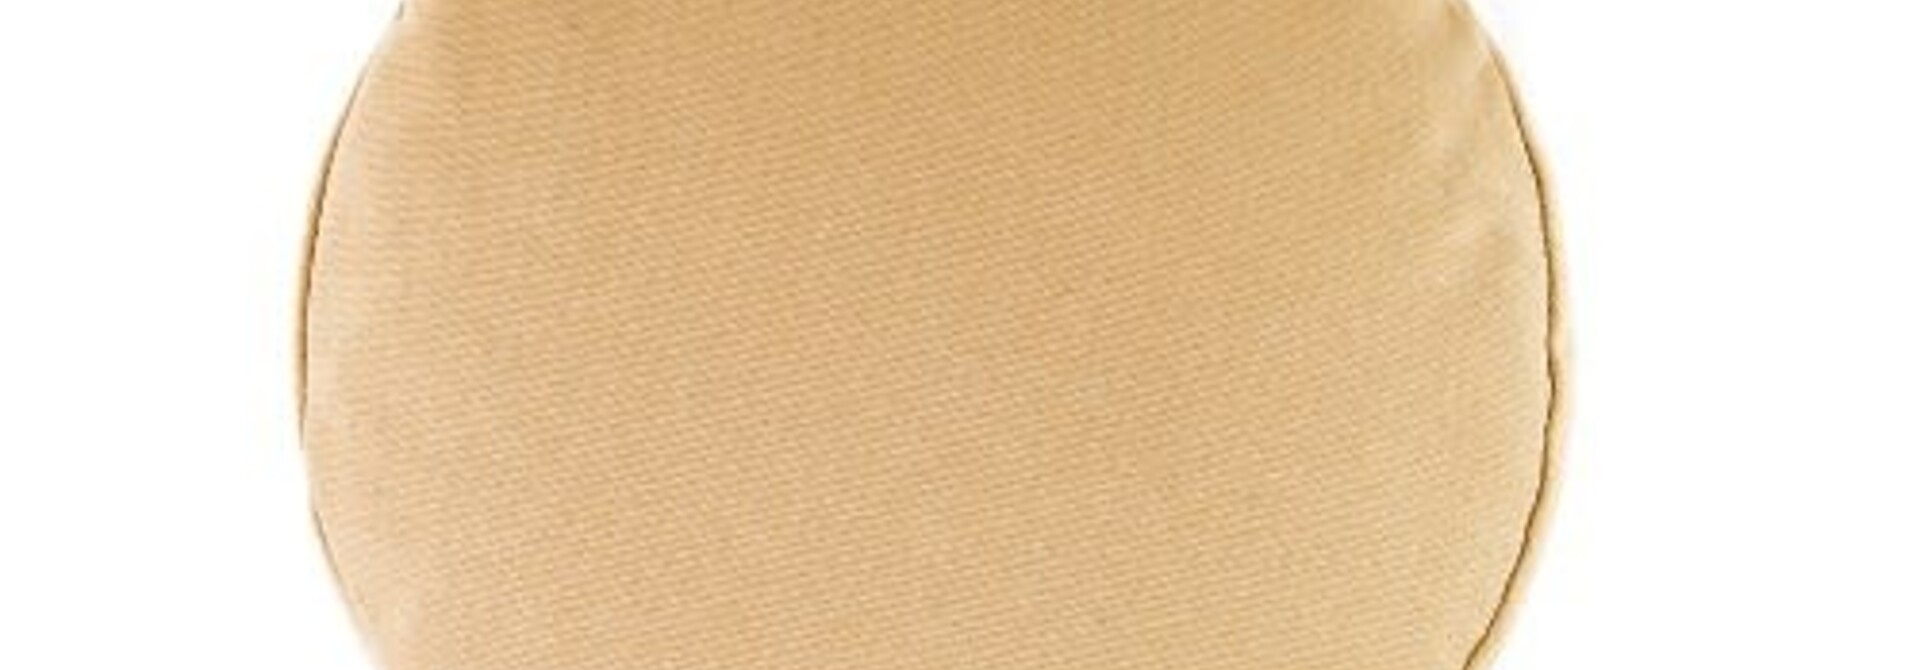 Yogisha Meditationskissen Deluxe 13 cm hoch – Sand